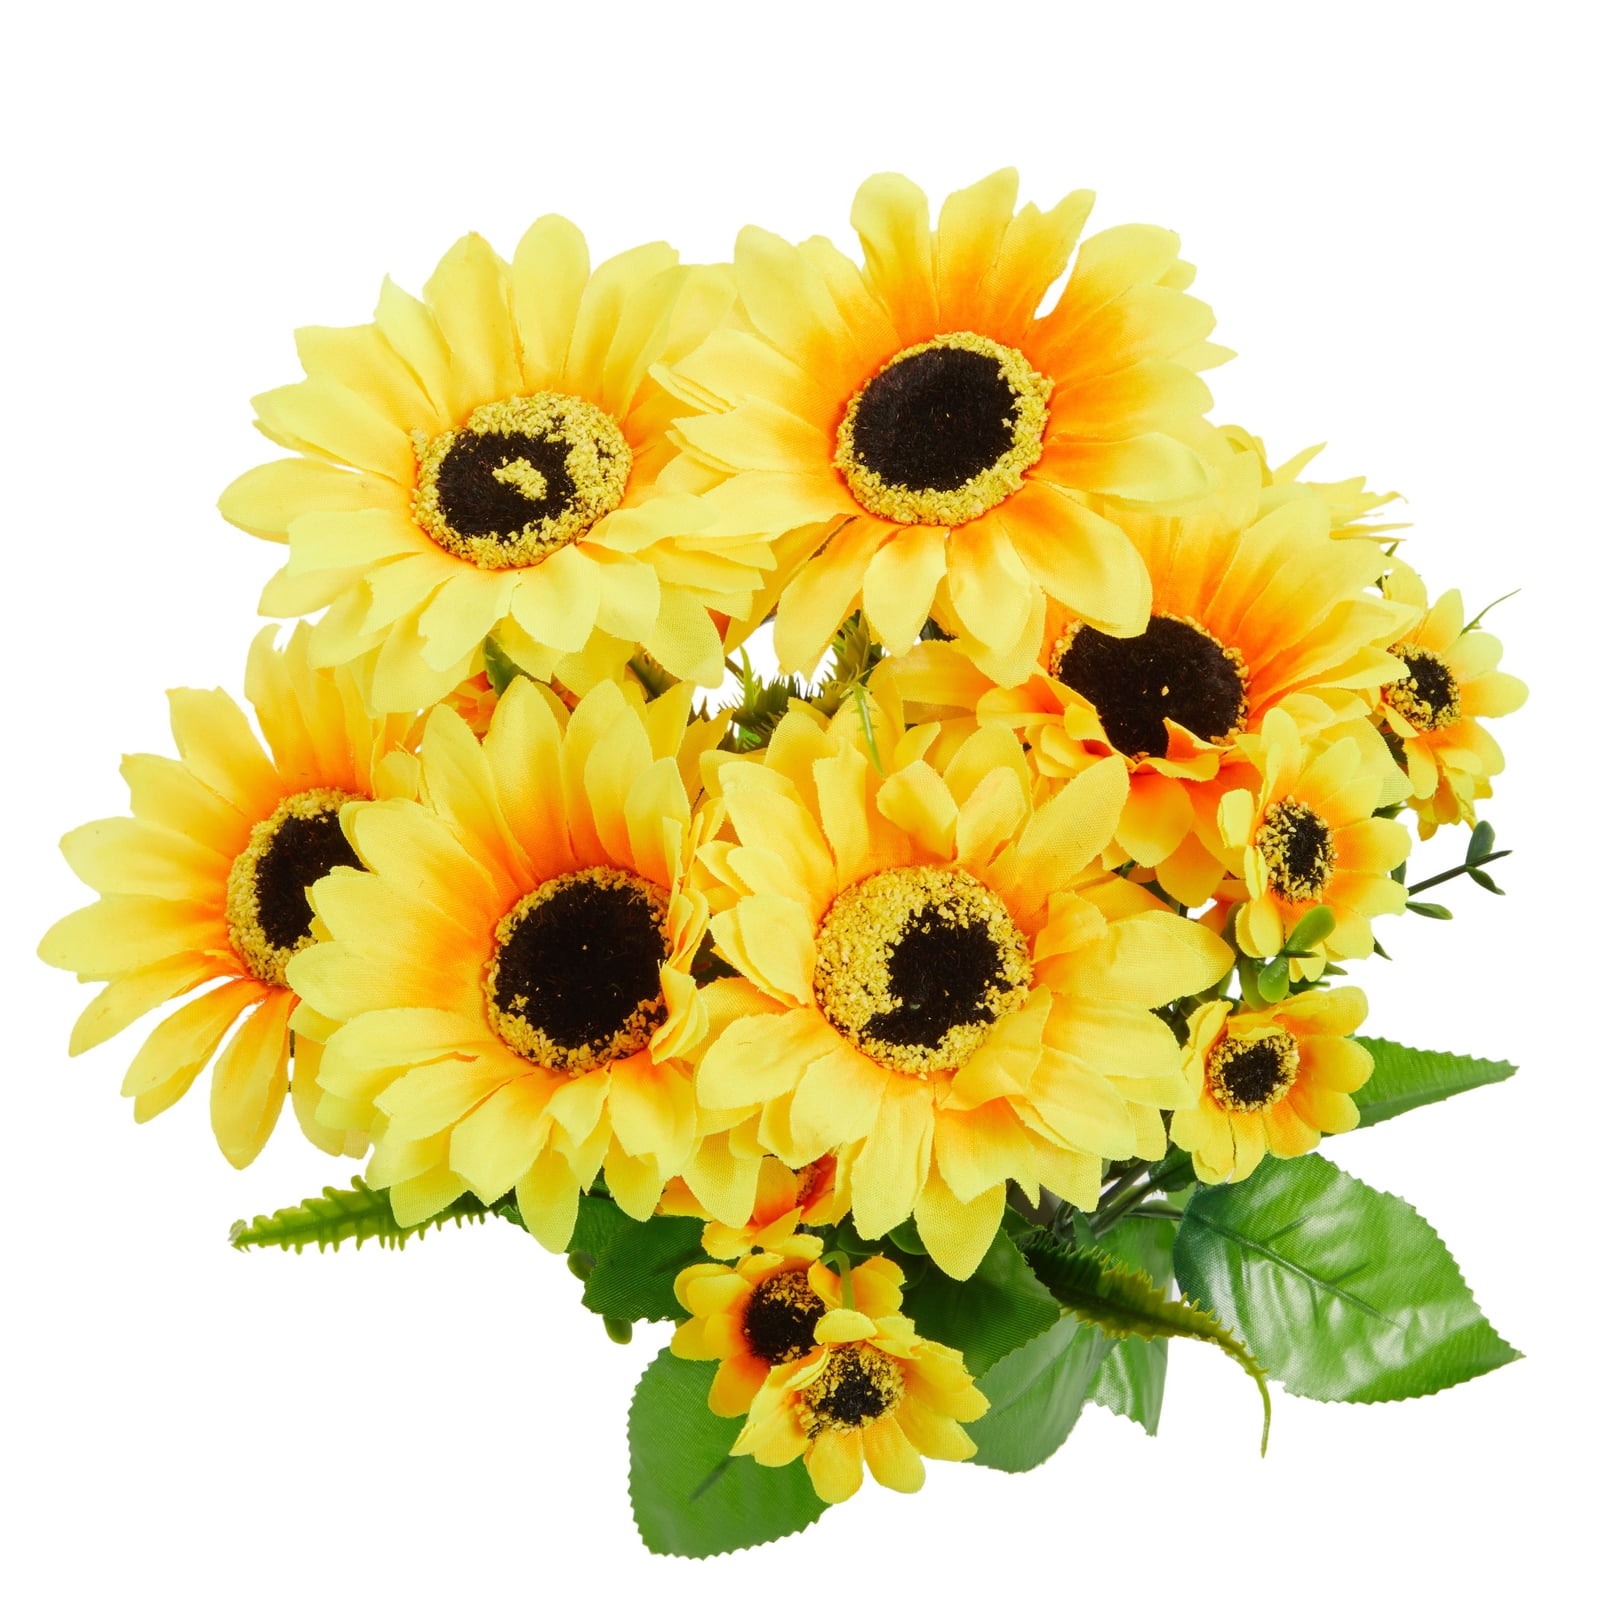 gardening lovers, cereal bowl sunflower bowl snack bowl sunflowers porridge bowl Personalised bowl